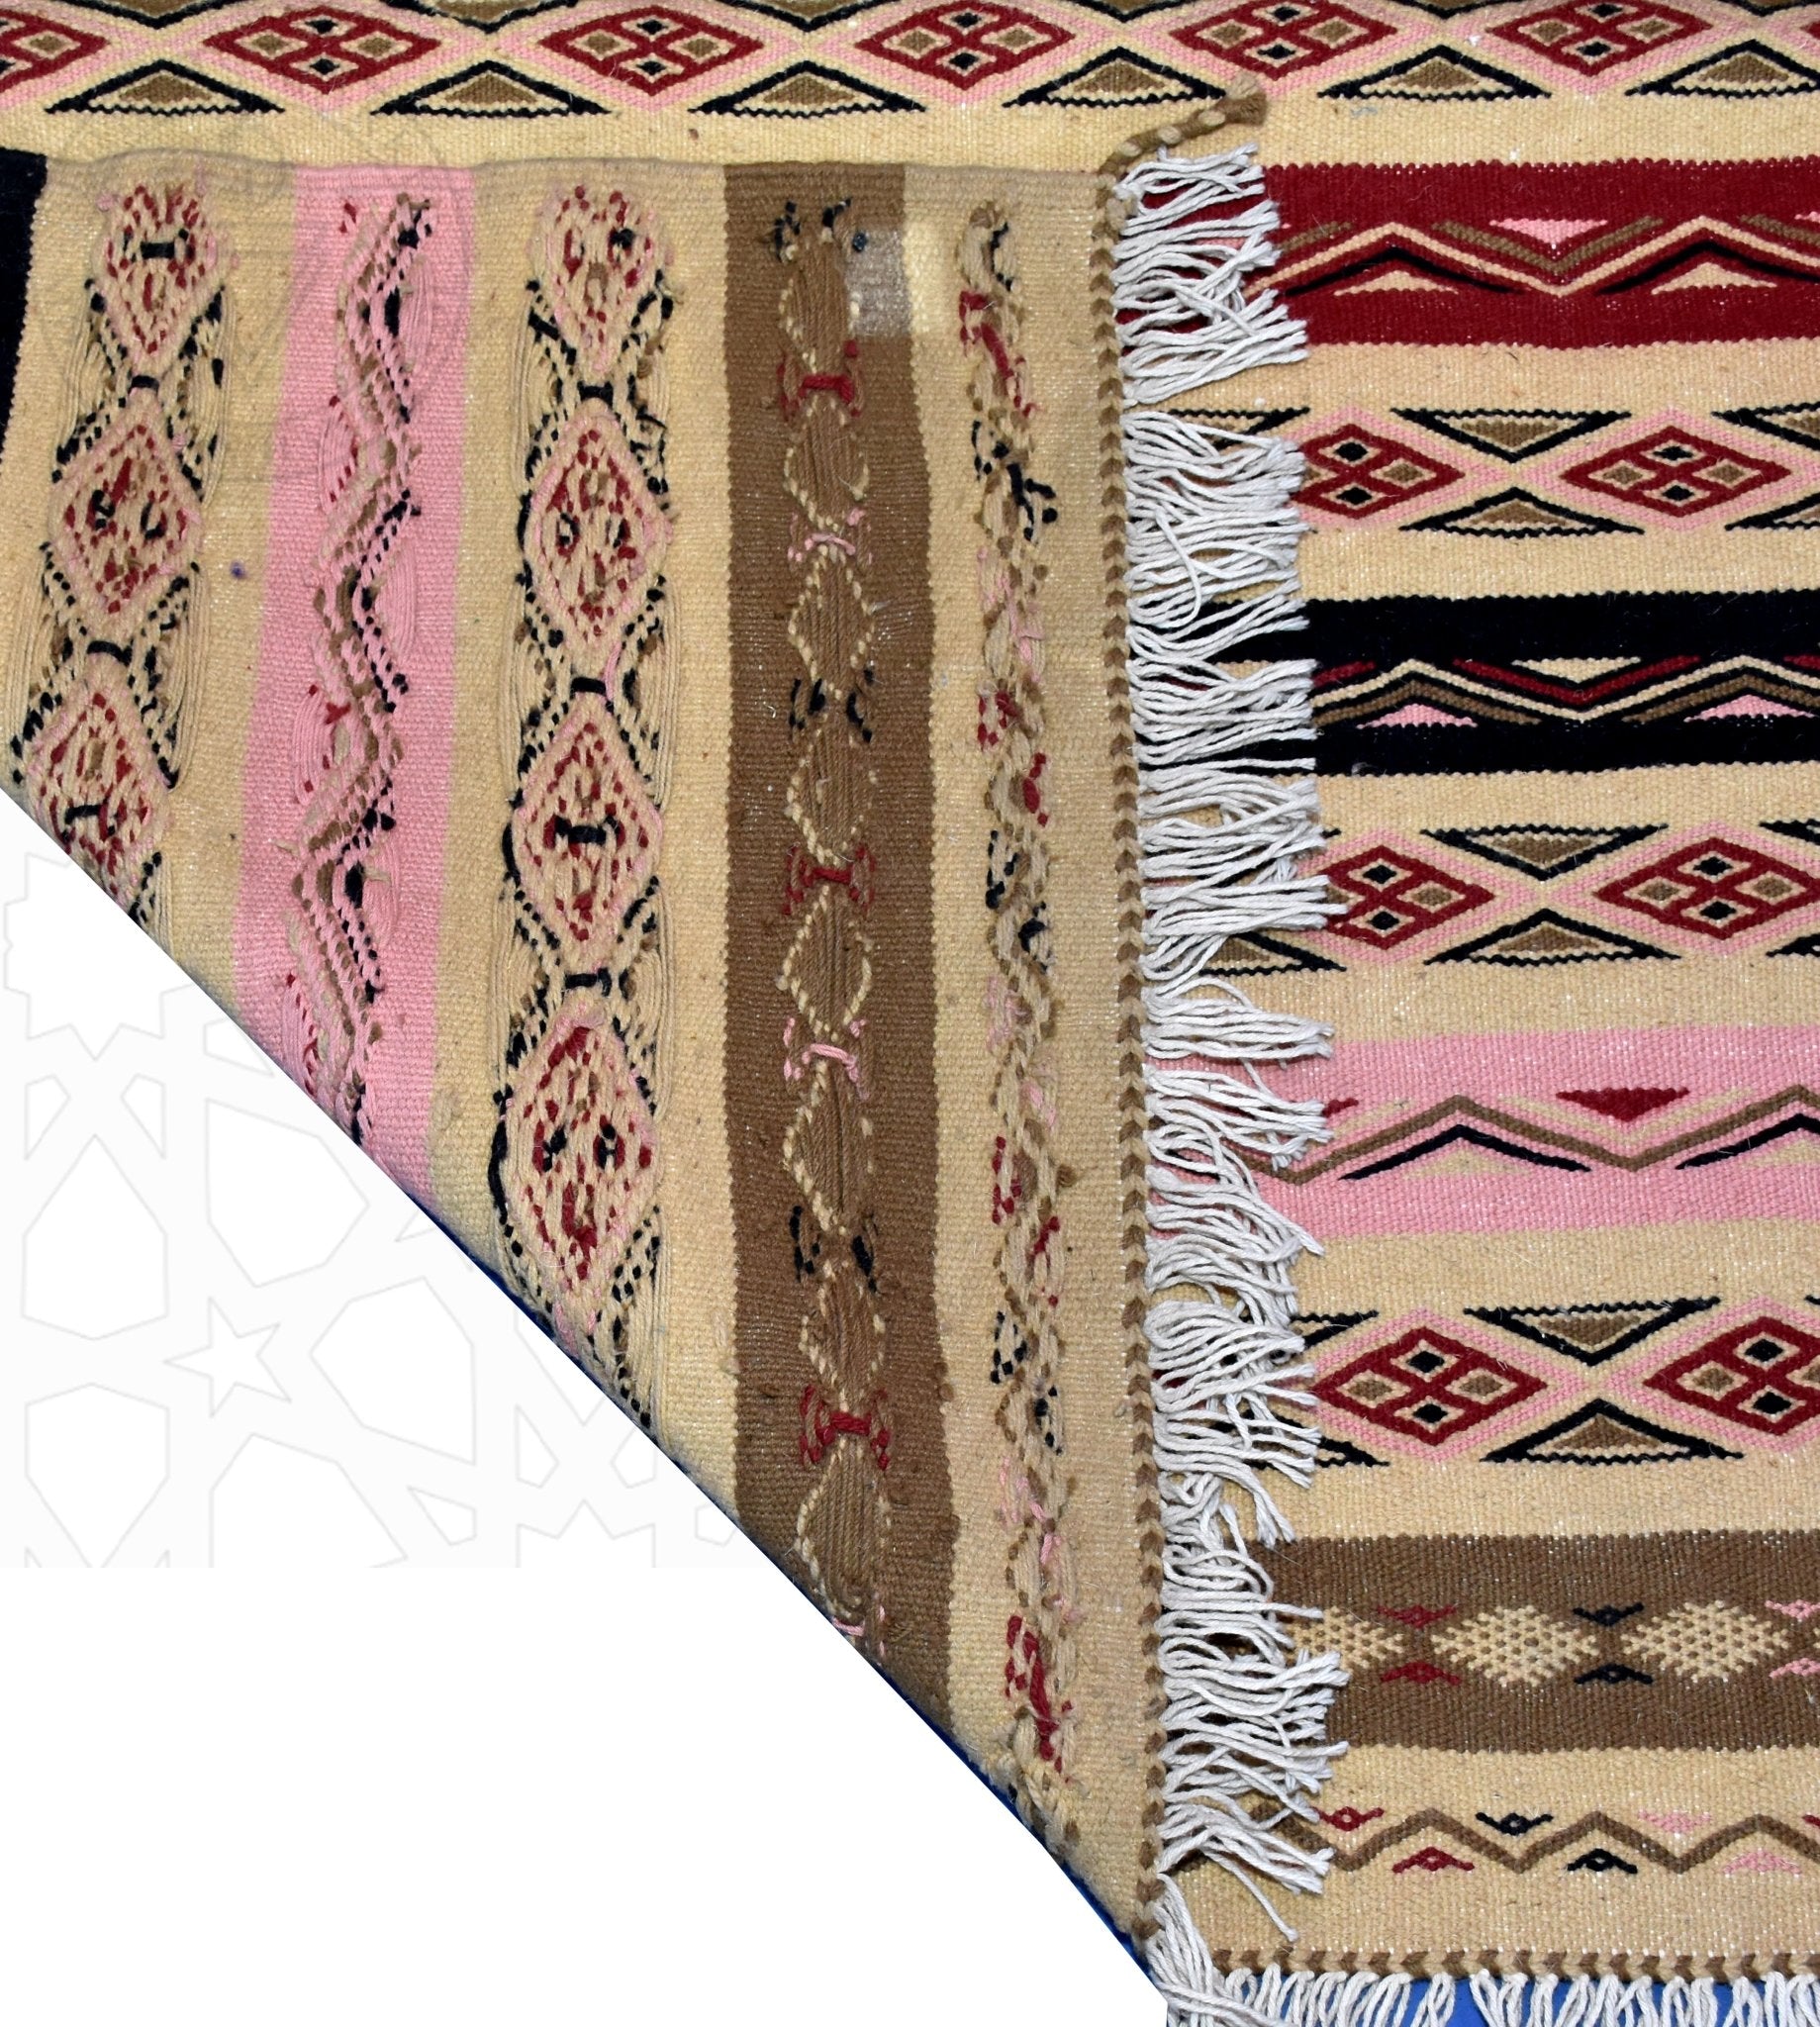 Flatweave kilim hanbal Moroccan rug - 4.6 x 6.57 ft / 140 x 200 cm - Berbers Market